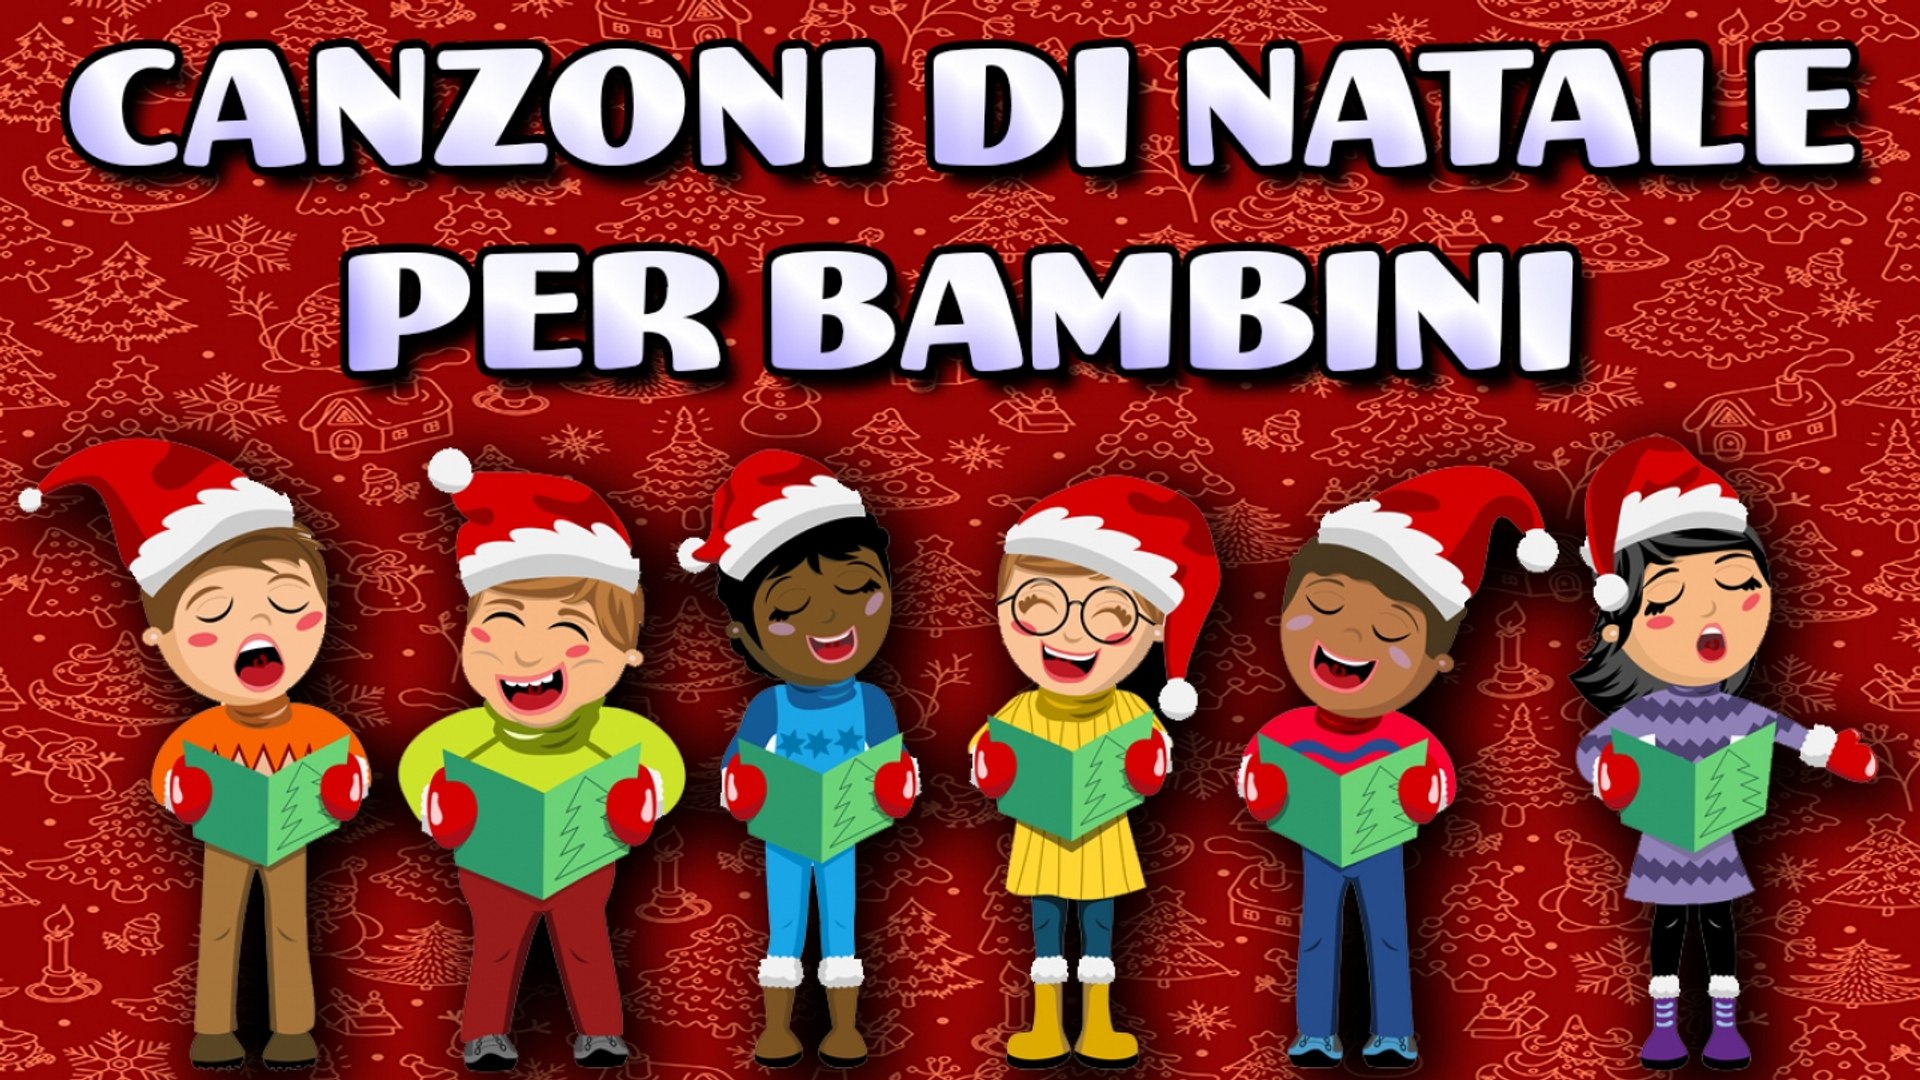 Canzoni Di Natale Bambini.Va Canzoni Di Natale Per Bambini 2019 Natalebambini Video Dailymotion